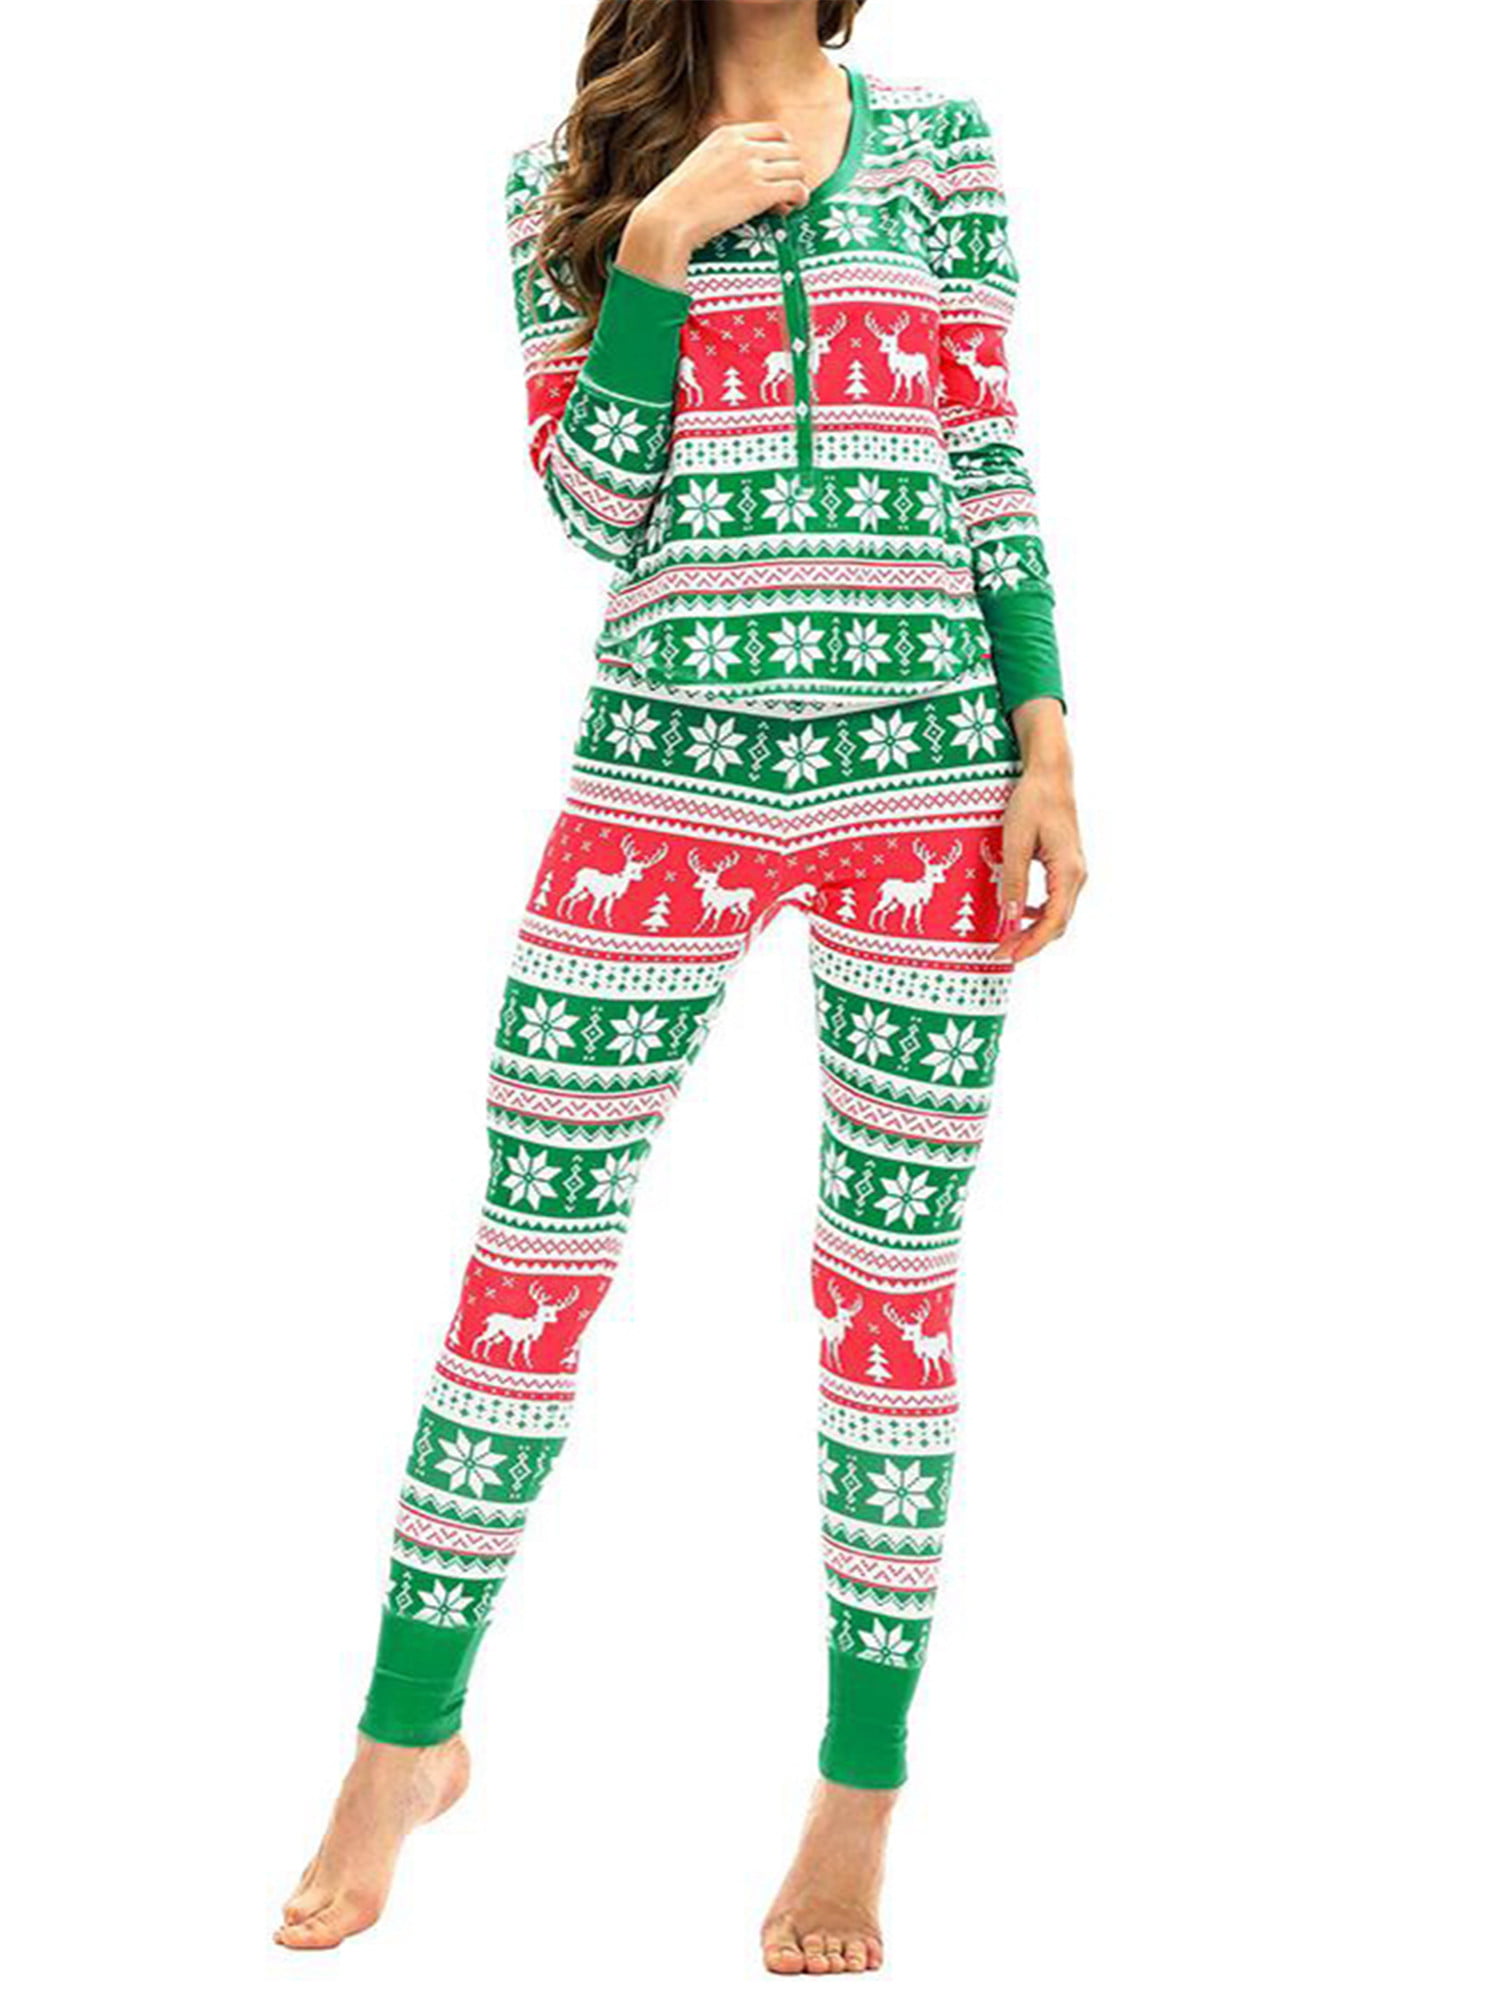 Women Matching Snowflake Long Sleeves Christmas Pajamas Set Top Blouse+Pants